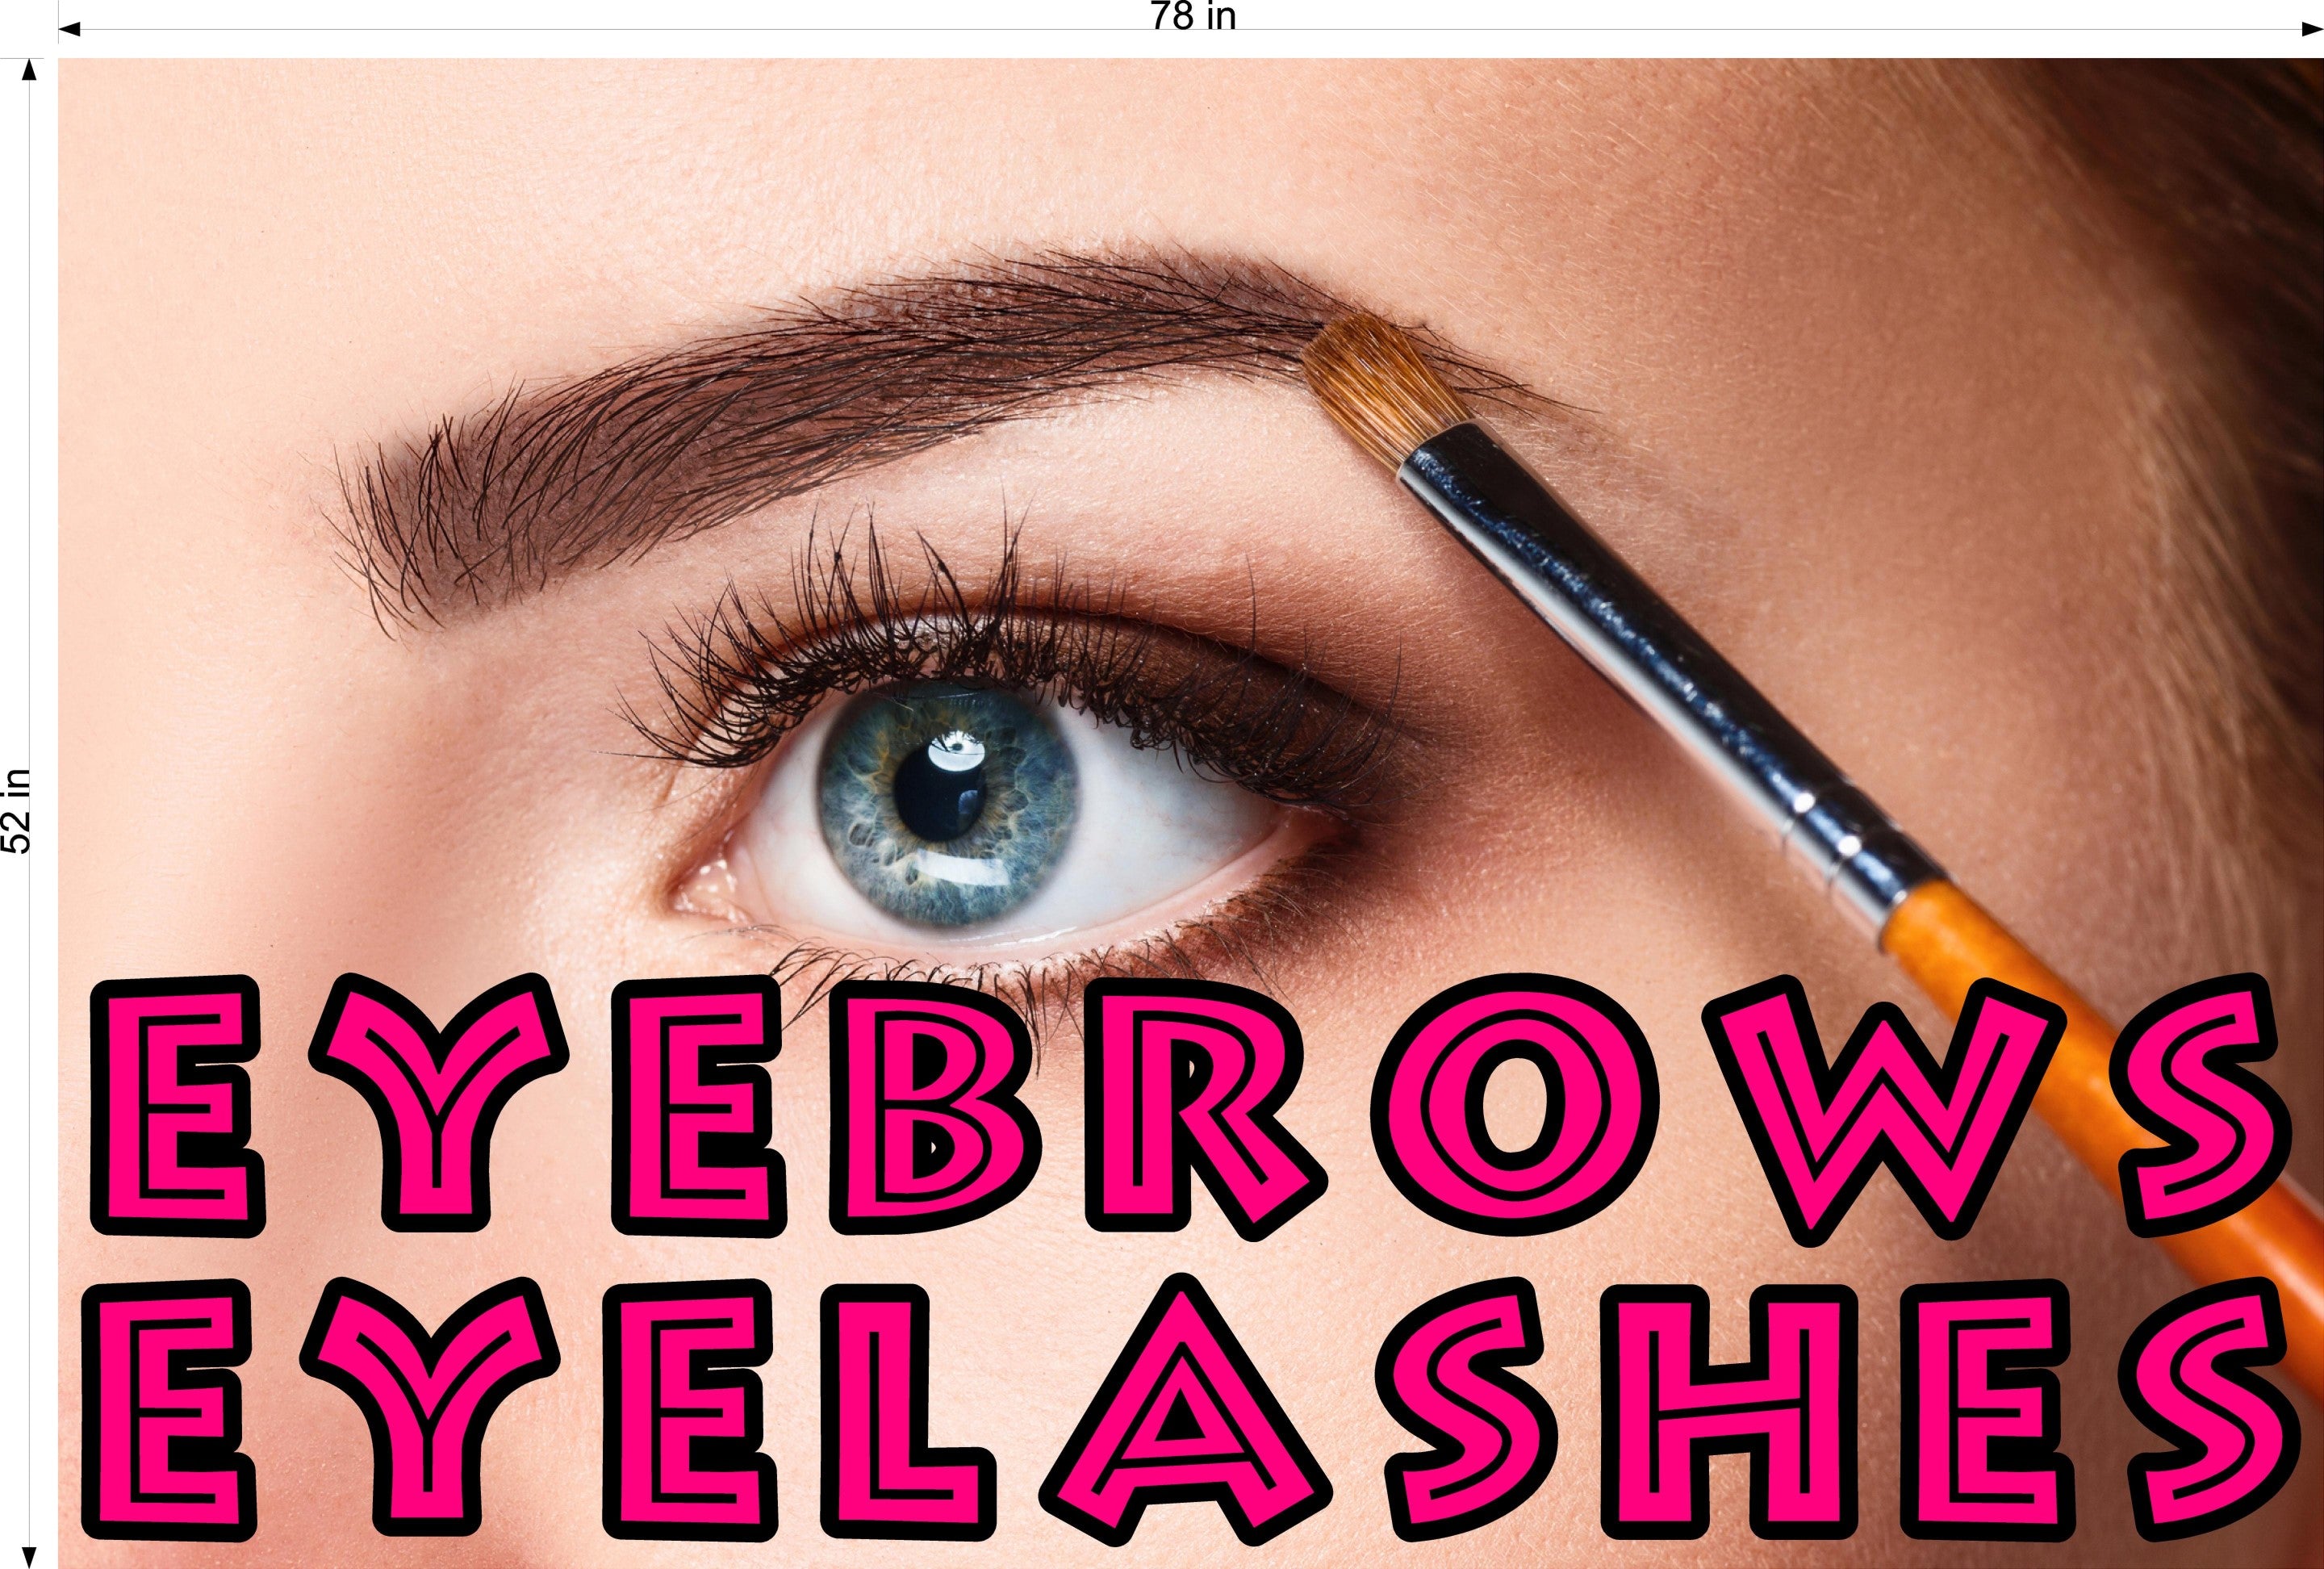 Eyebrows 03 Perforated Mesh One Way Vision See-Through Window Salon Vinyl Sign eyelashes Horizontal